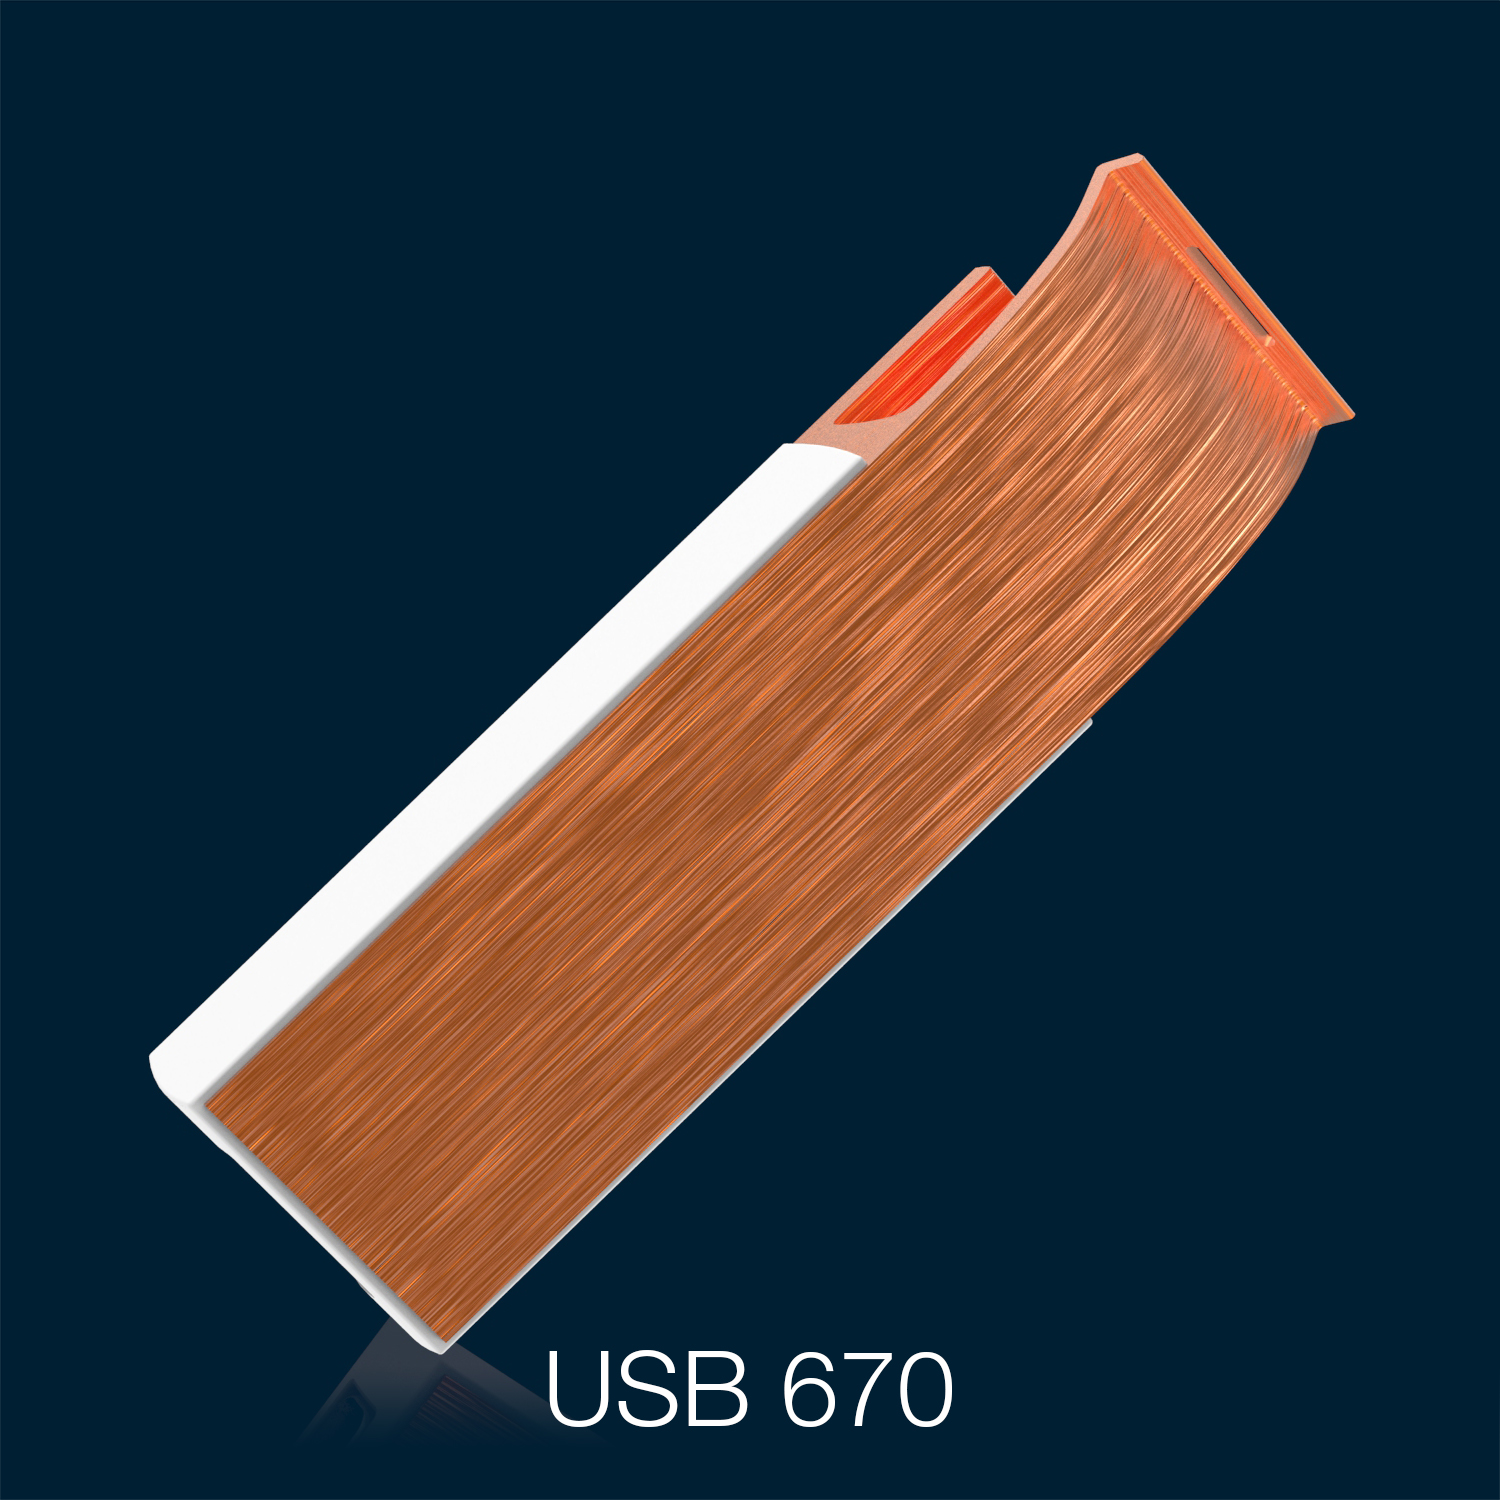 USB 670